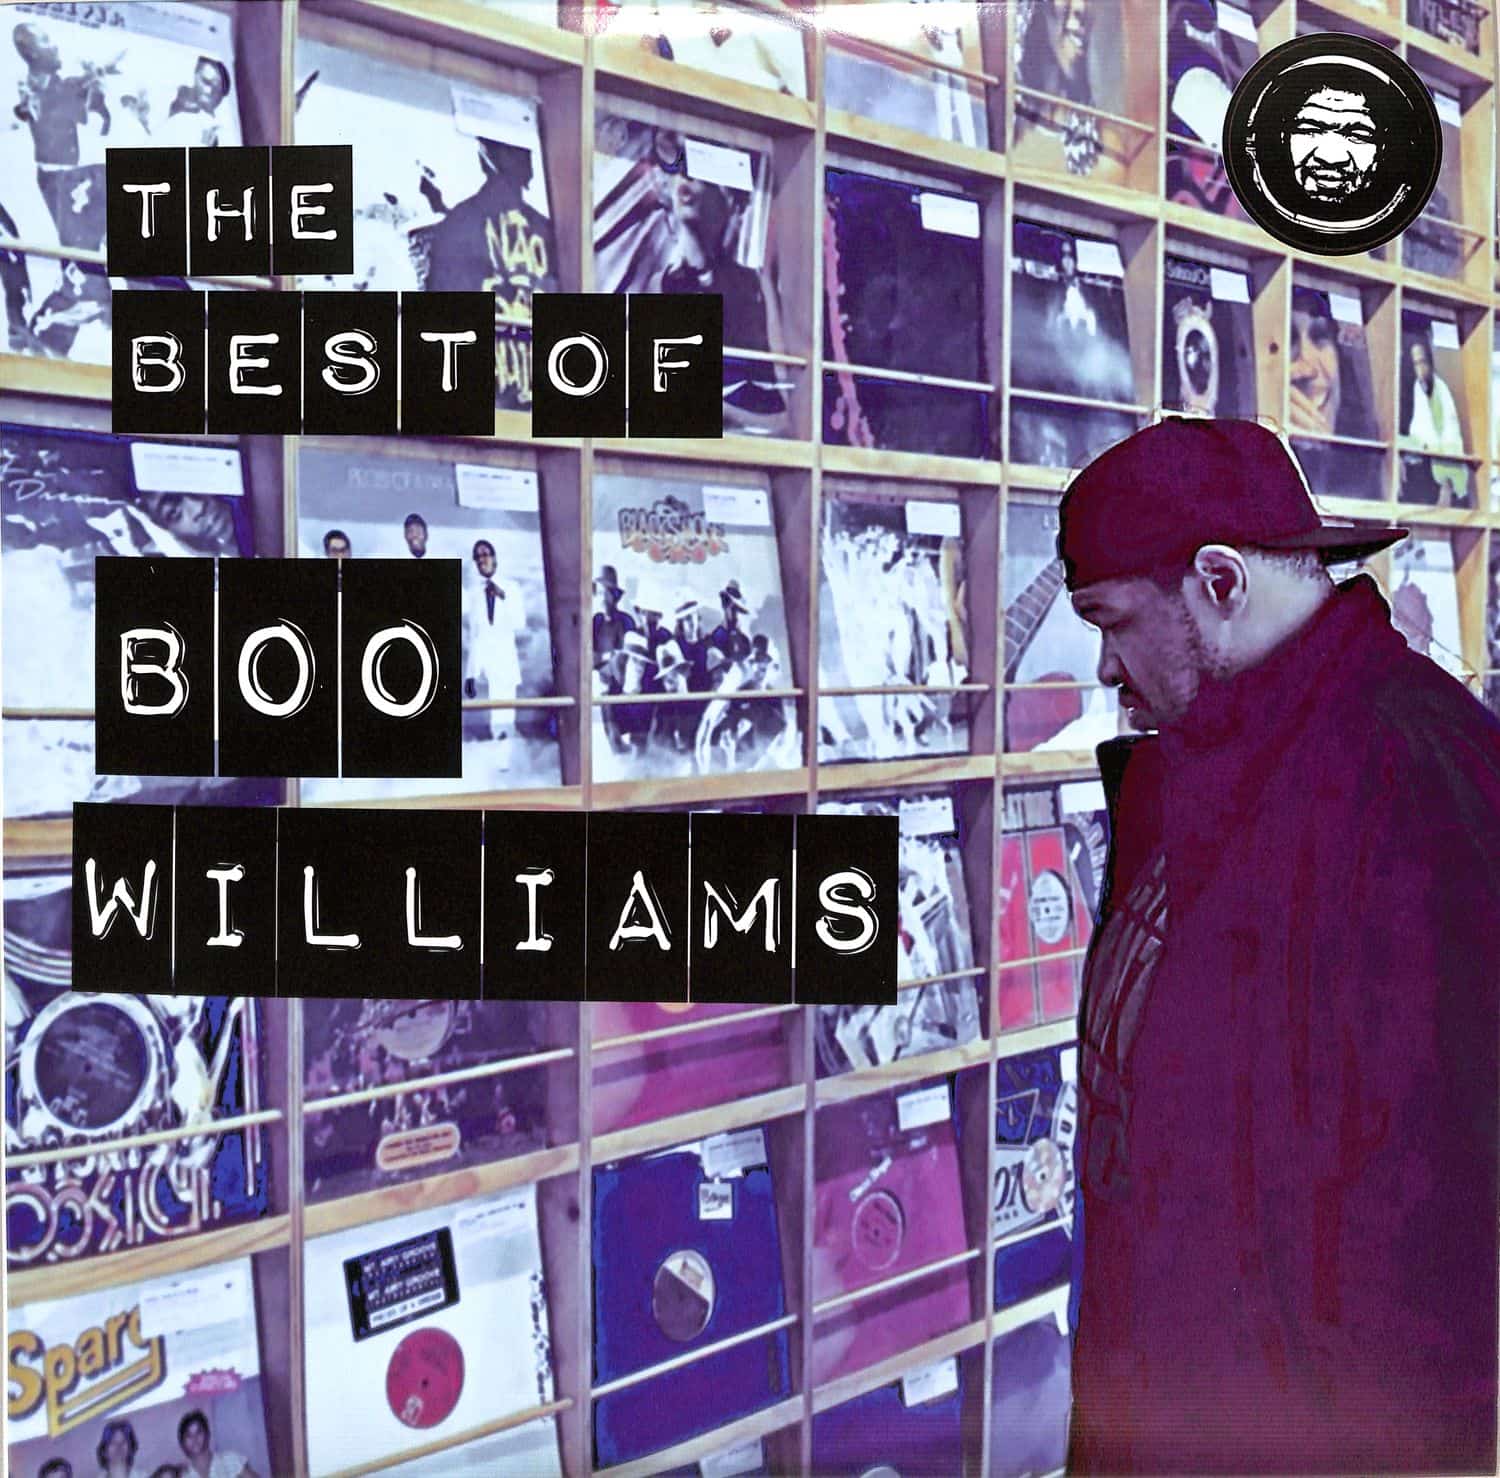 Boo Williams - BEST OF BOO WILLIAMS 